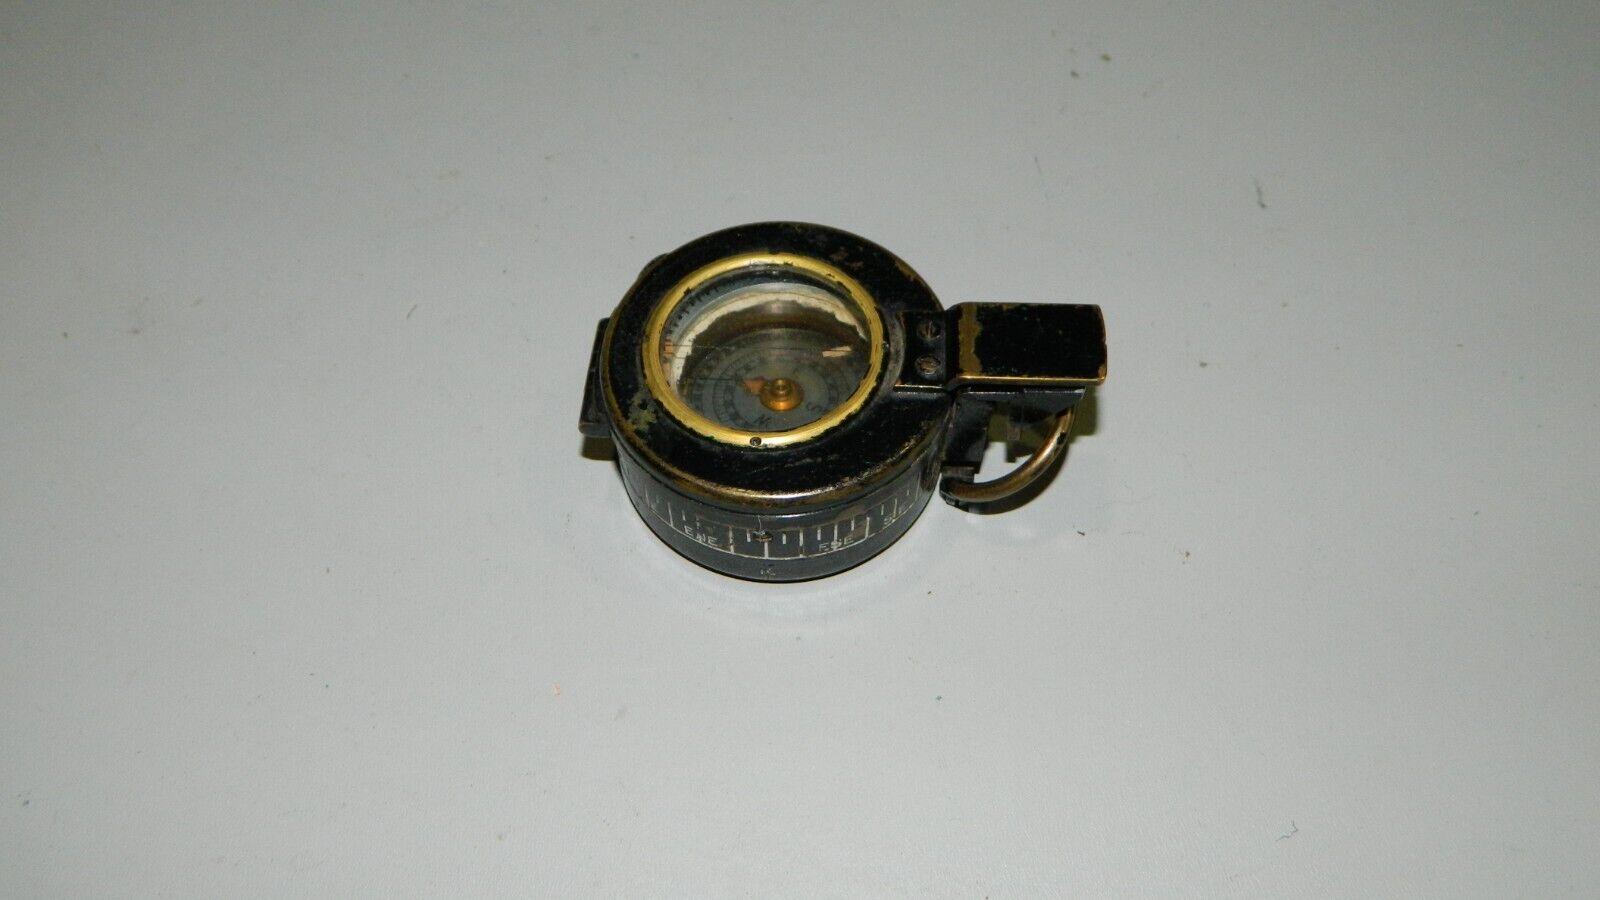 Pocket field compass T G & Co Ltd London 1941, WWII WW2